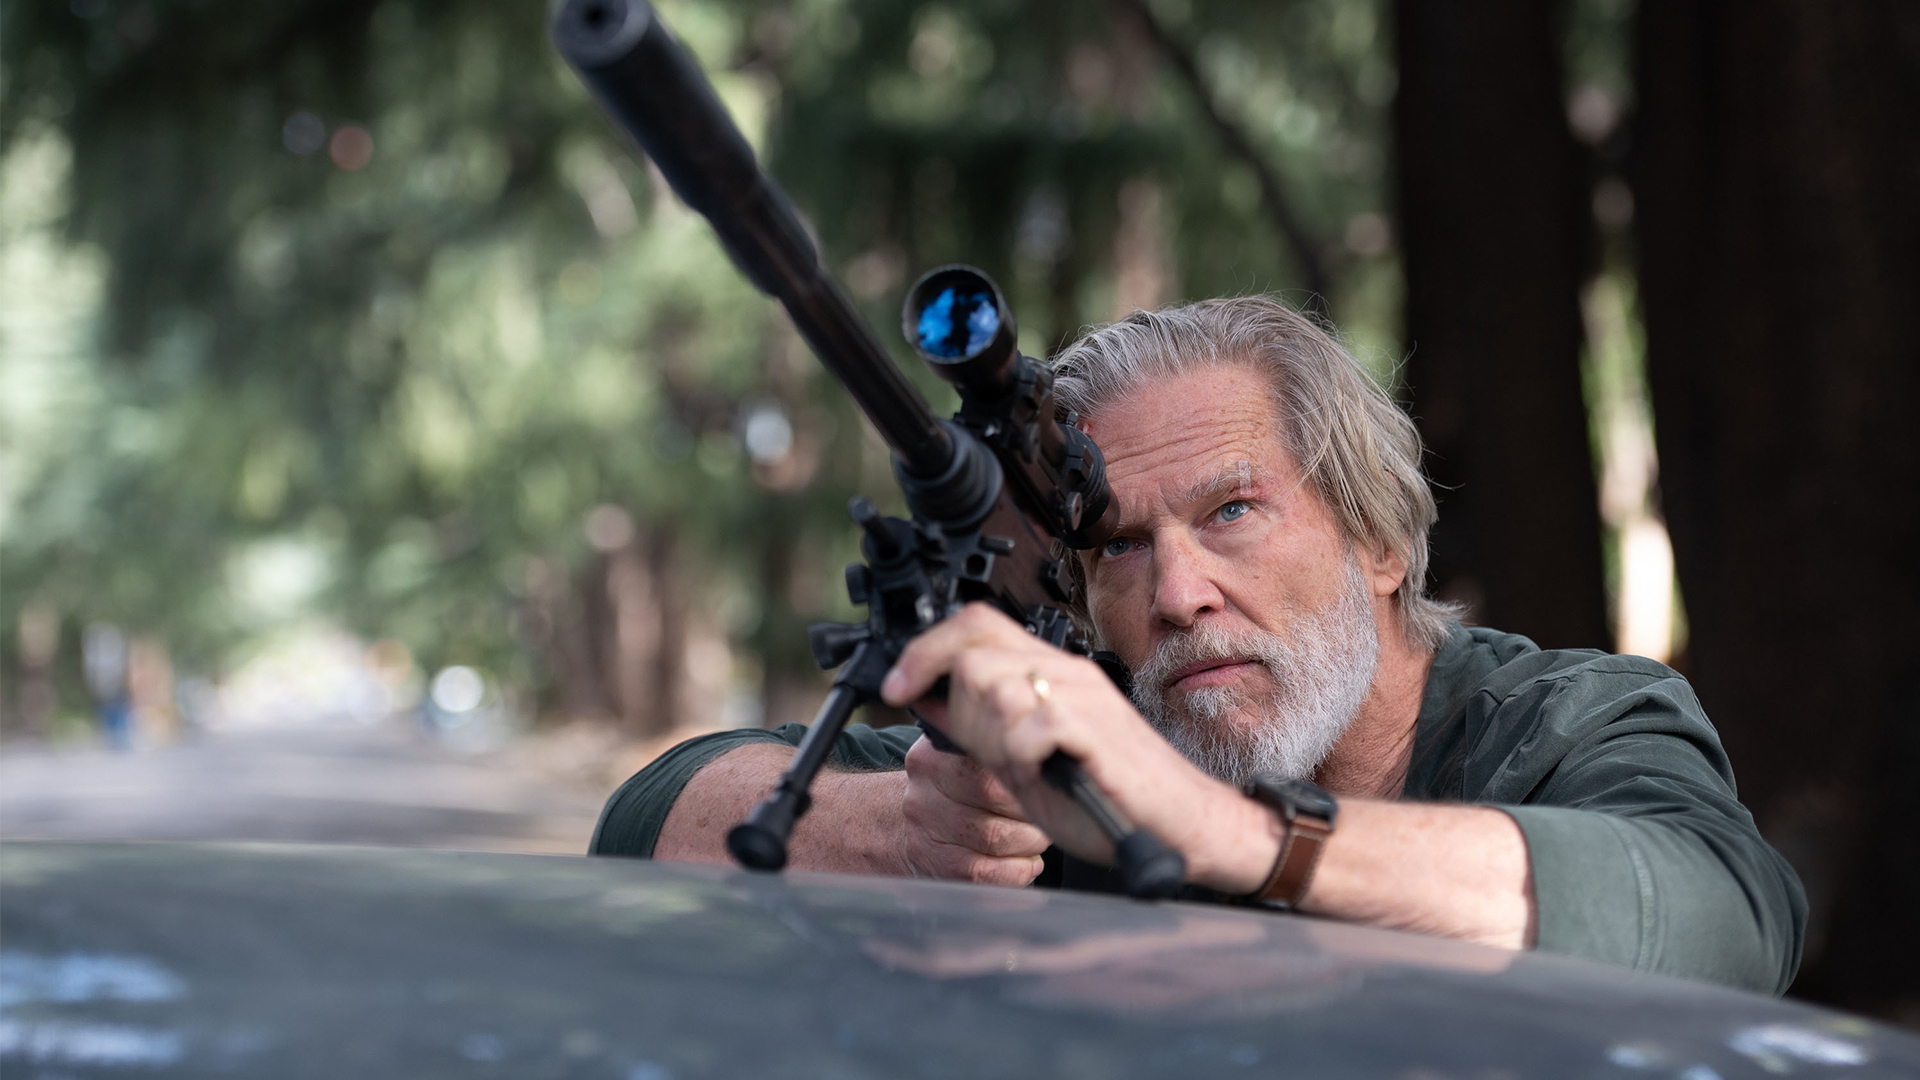 Jeff Bridges in The Old Man. Image: FX